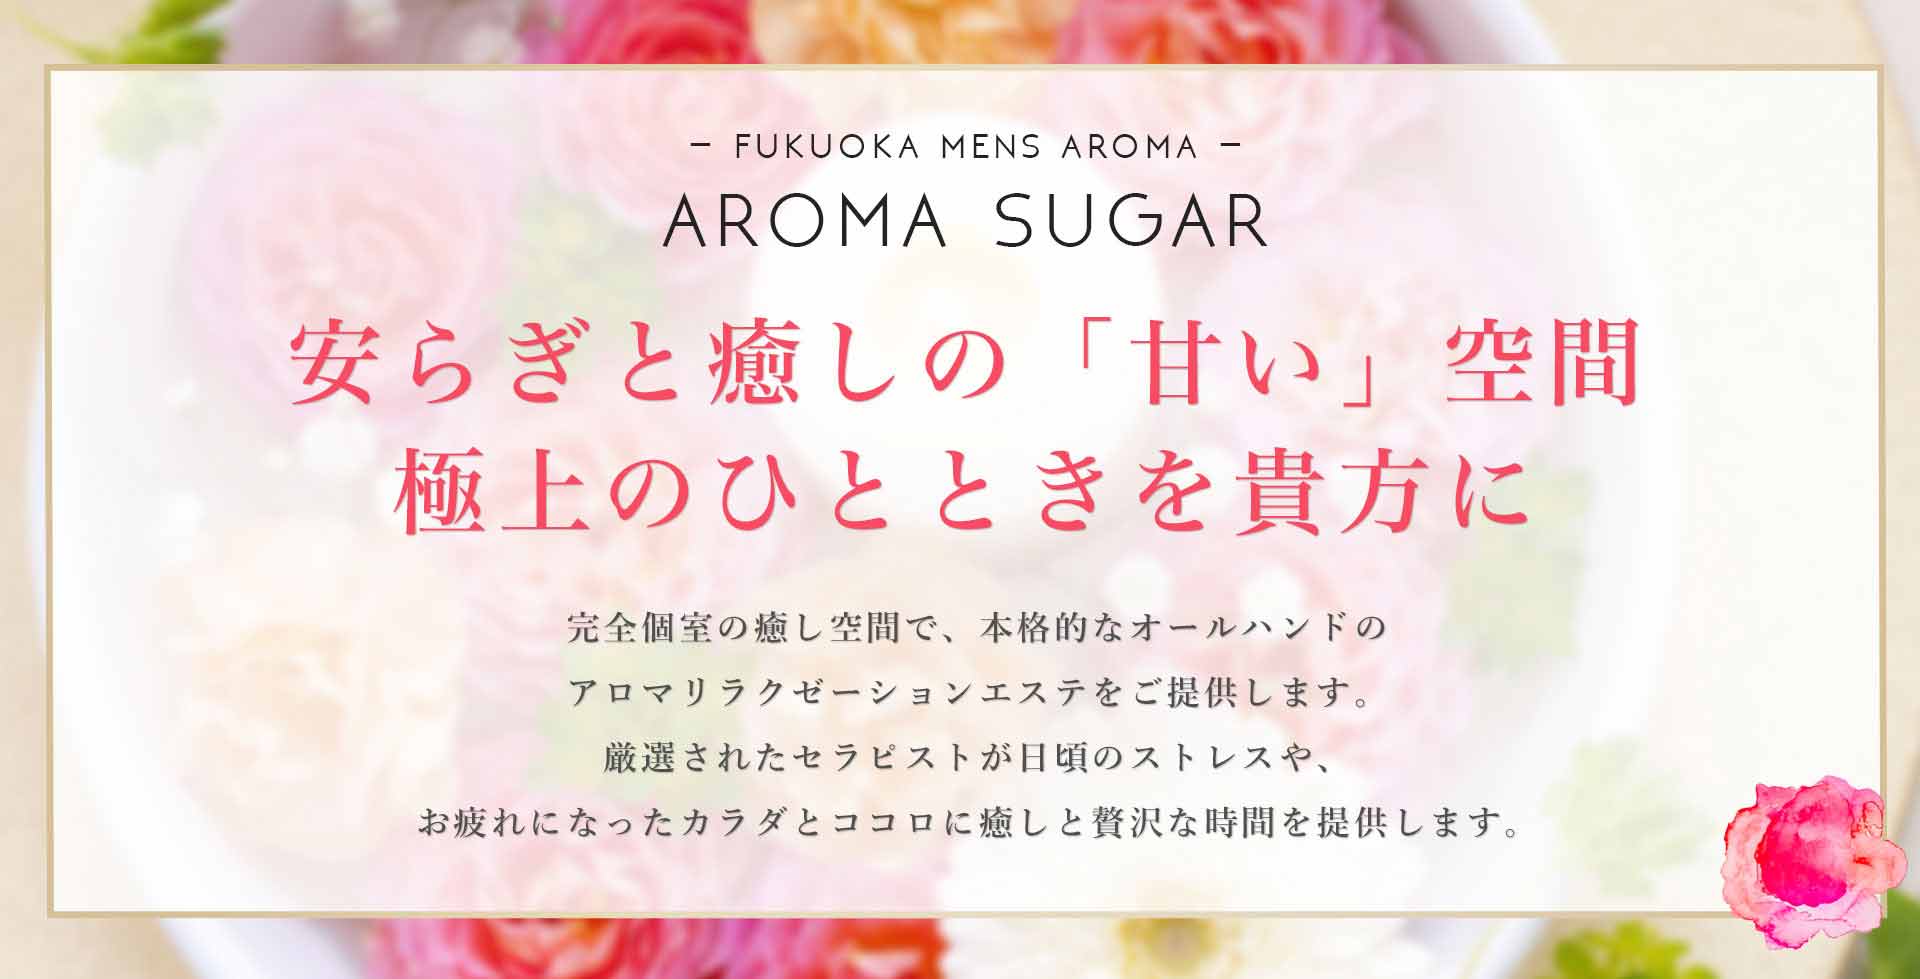 Aroma Sugar アロマシュガー